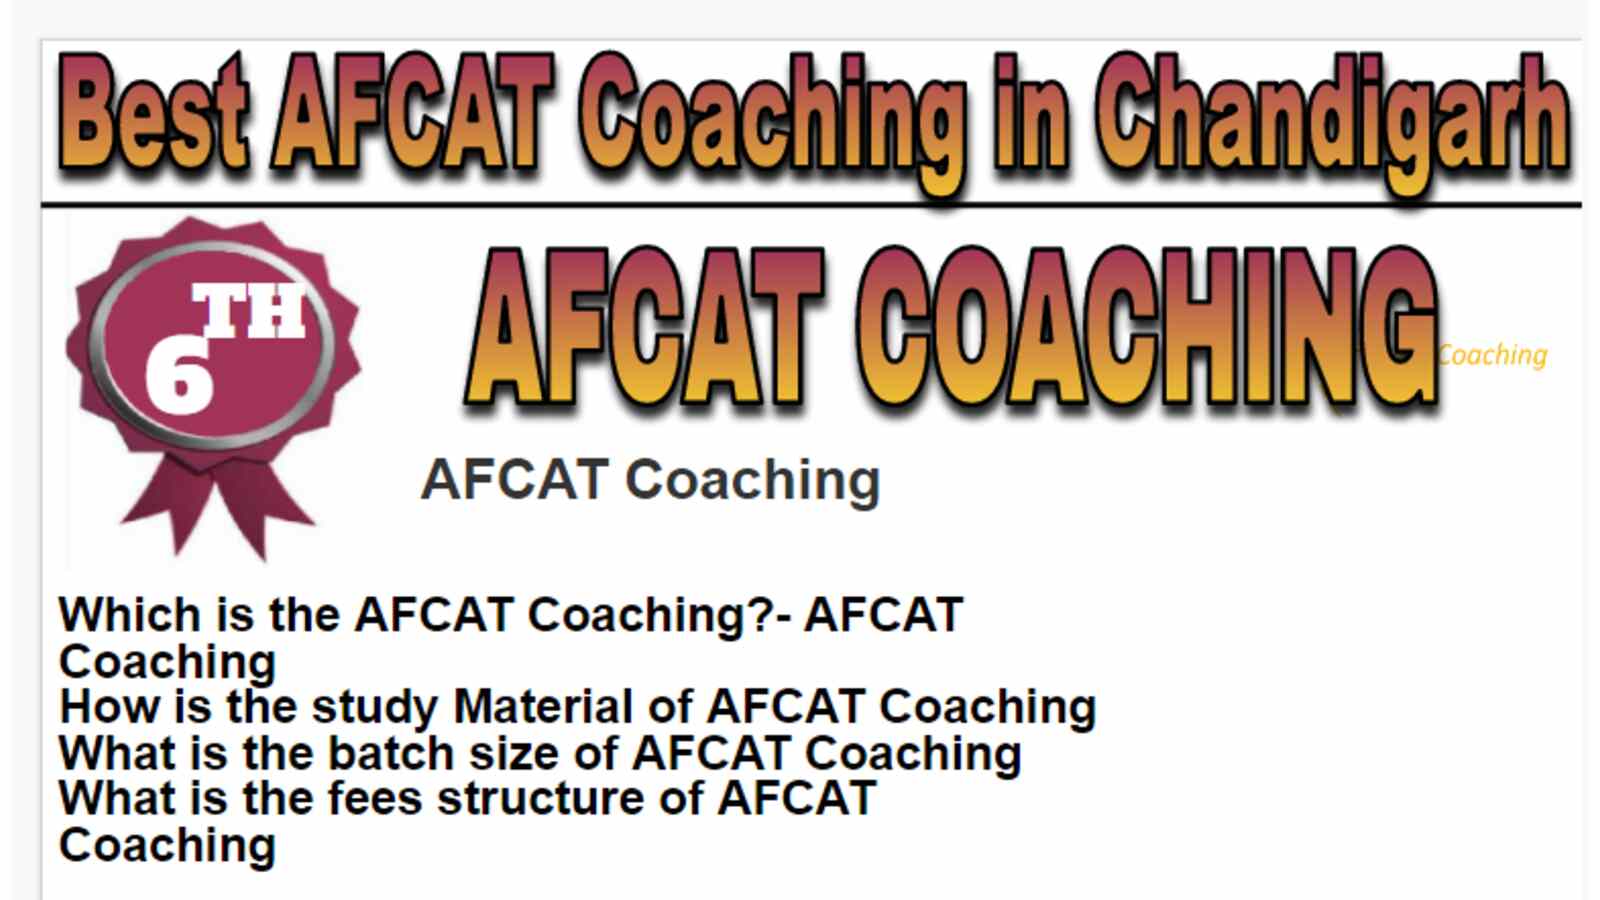 Rank 6 Best AFCAT Coaching in Chandigarh